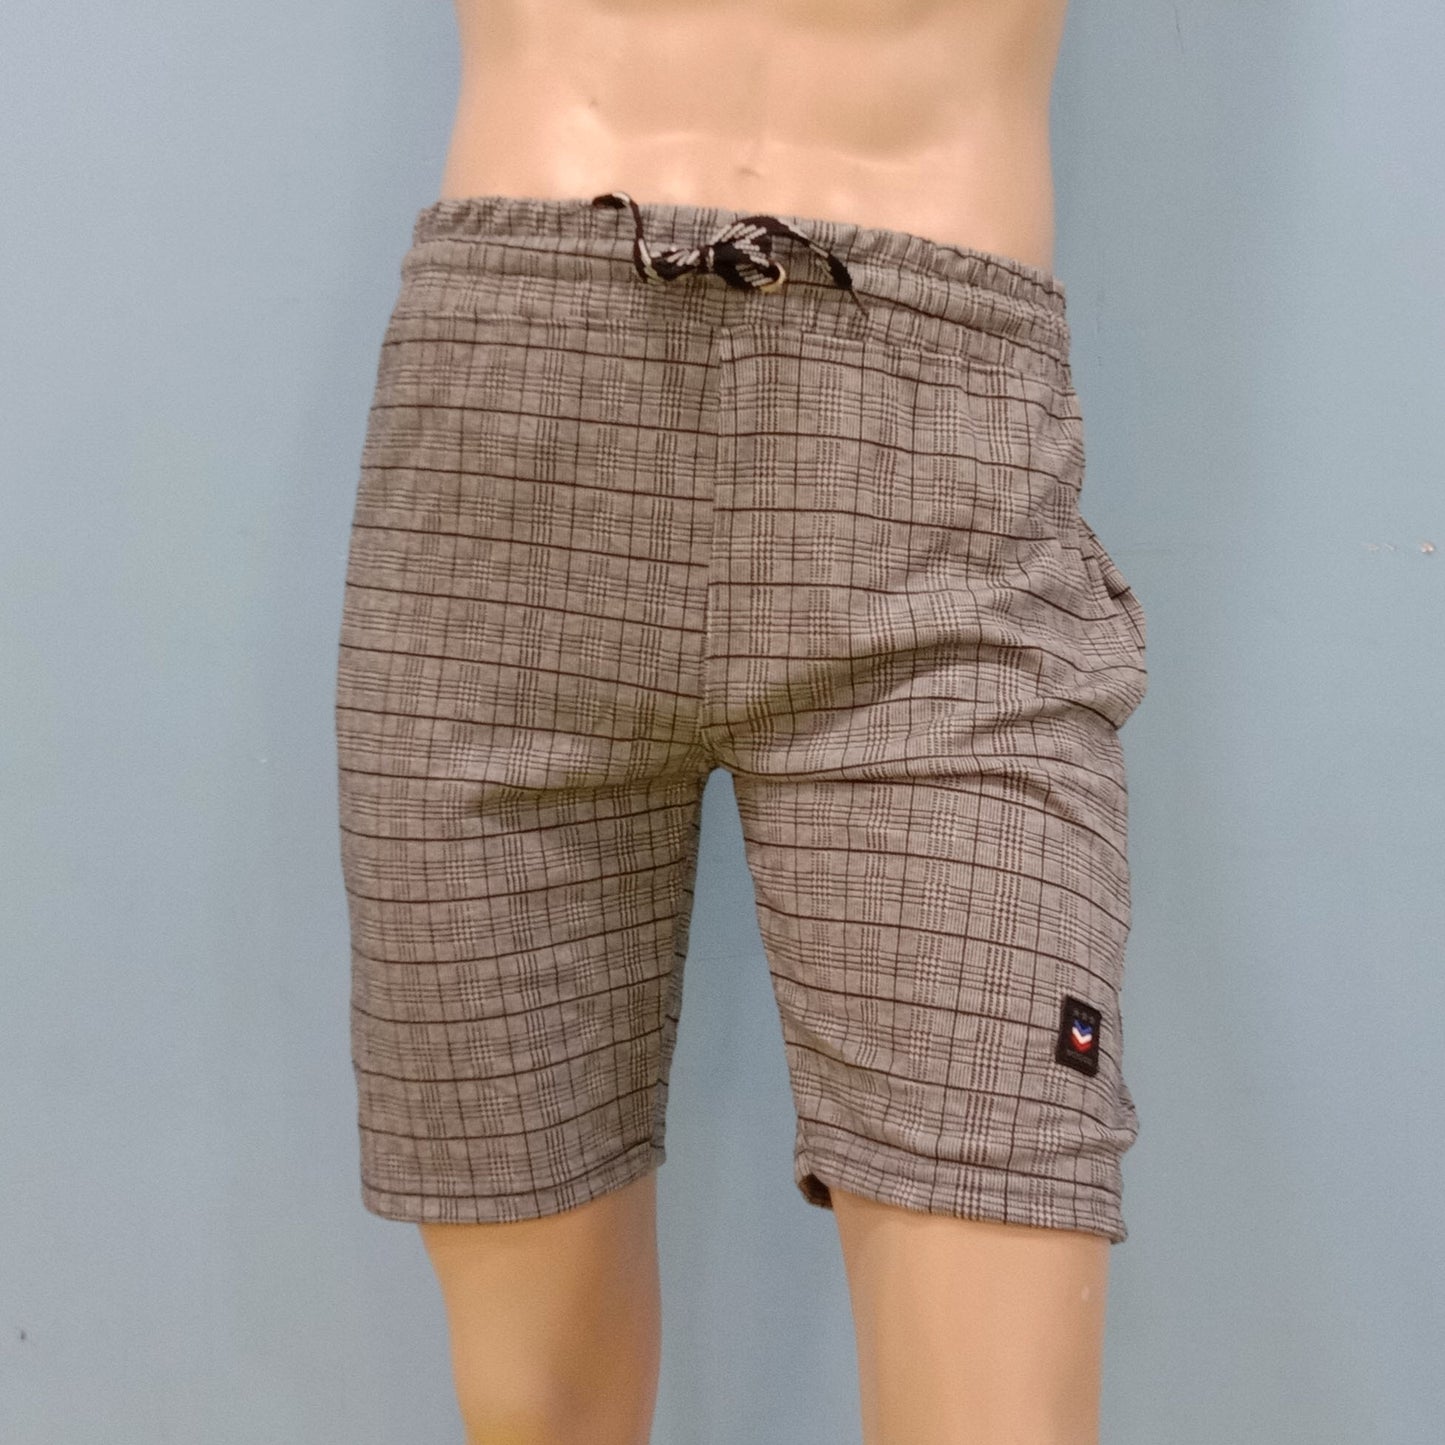 Small Checker Design Shorts for Men